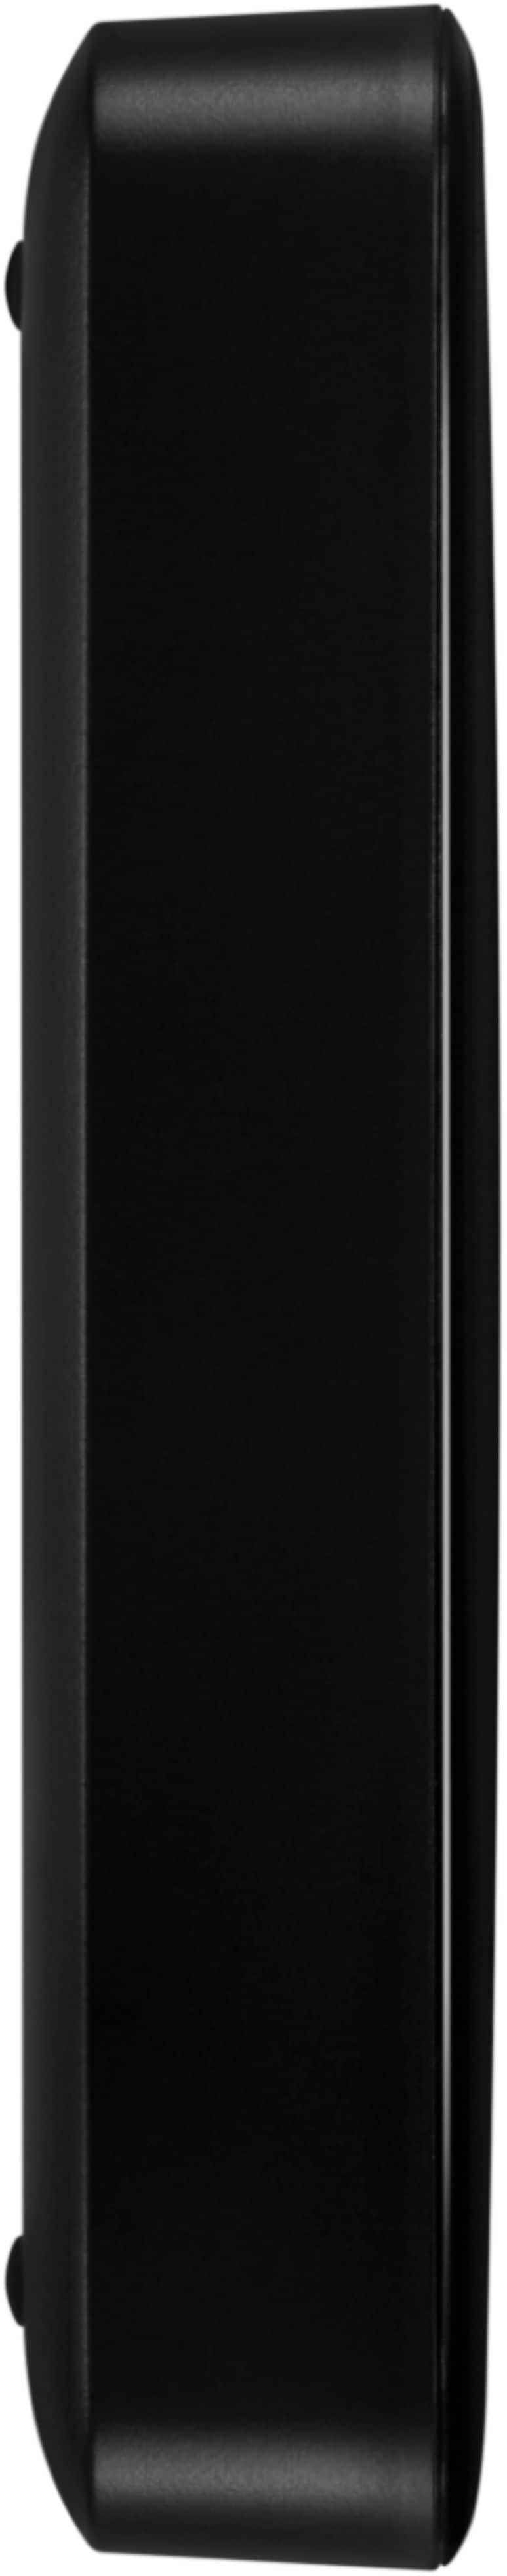 WD - Easystore 5TB External USB 3.0 Portable Hard Drive - Black_6